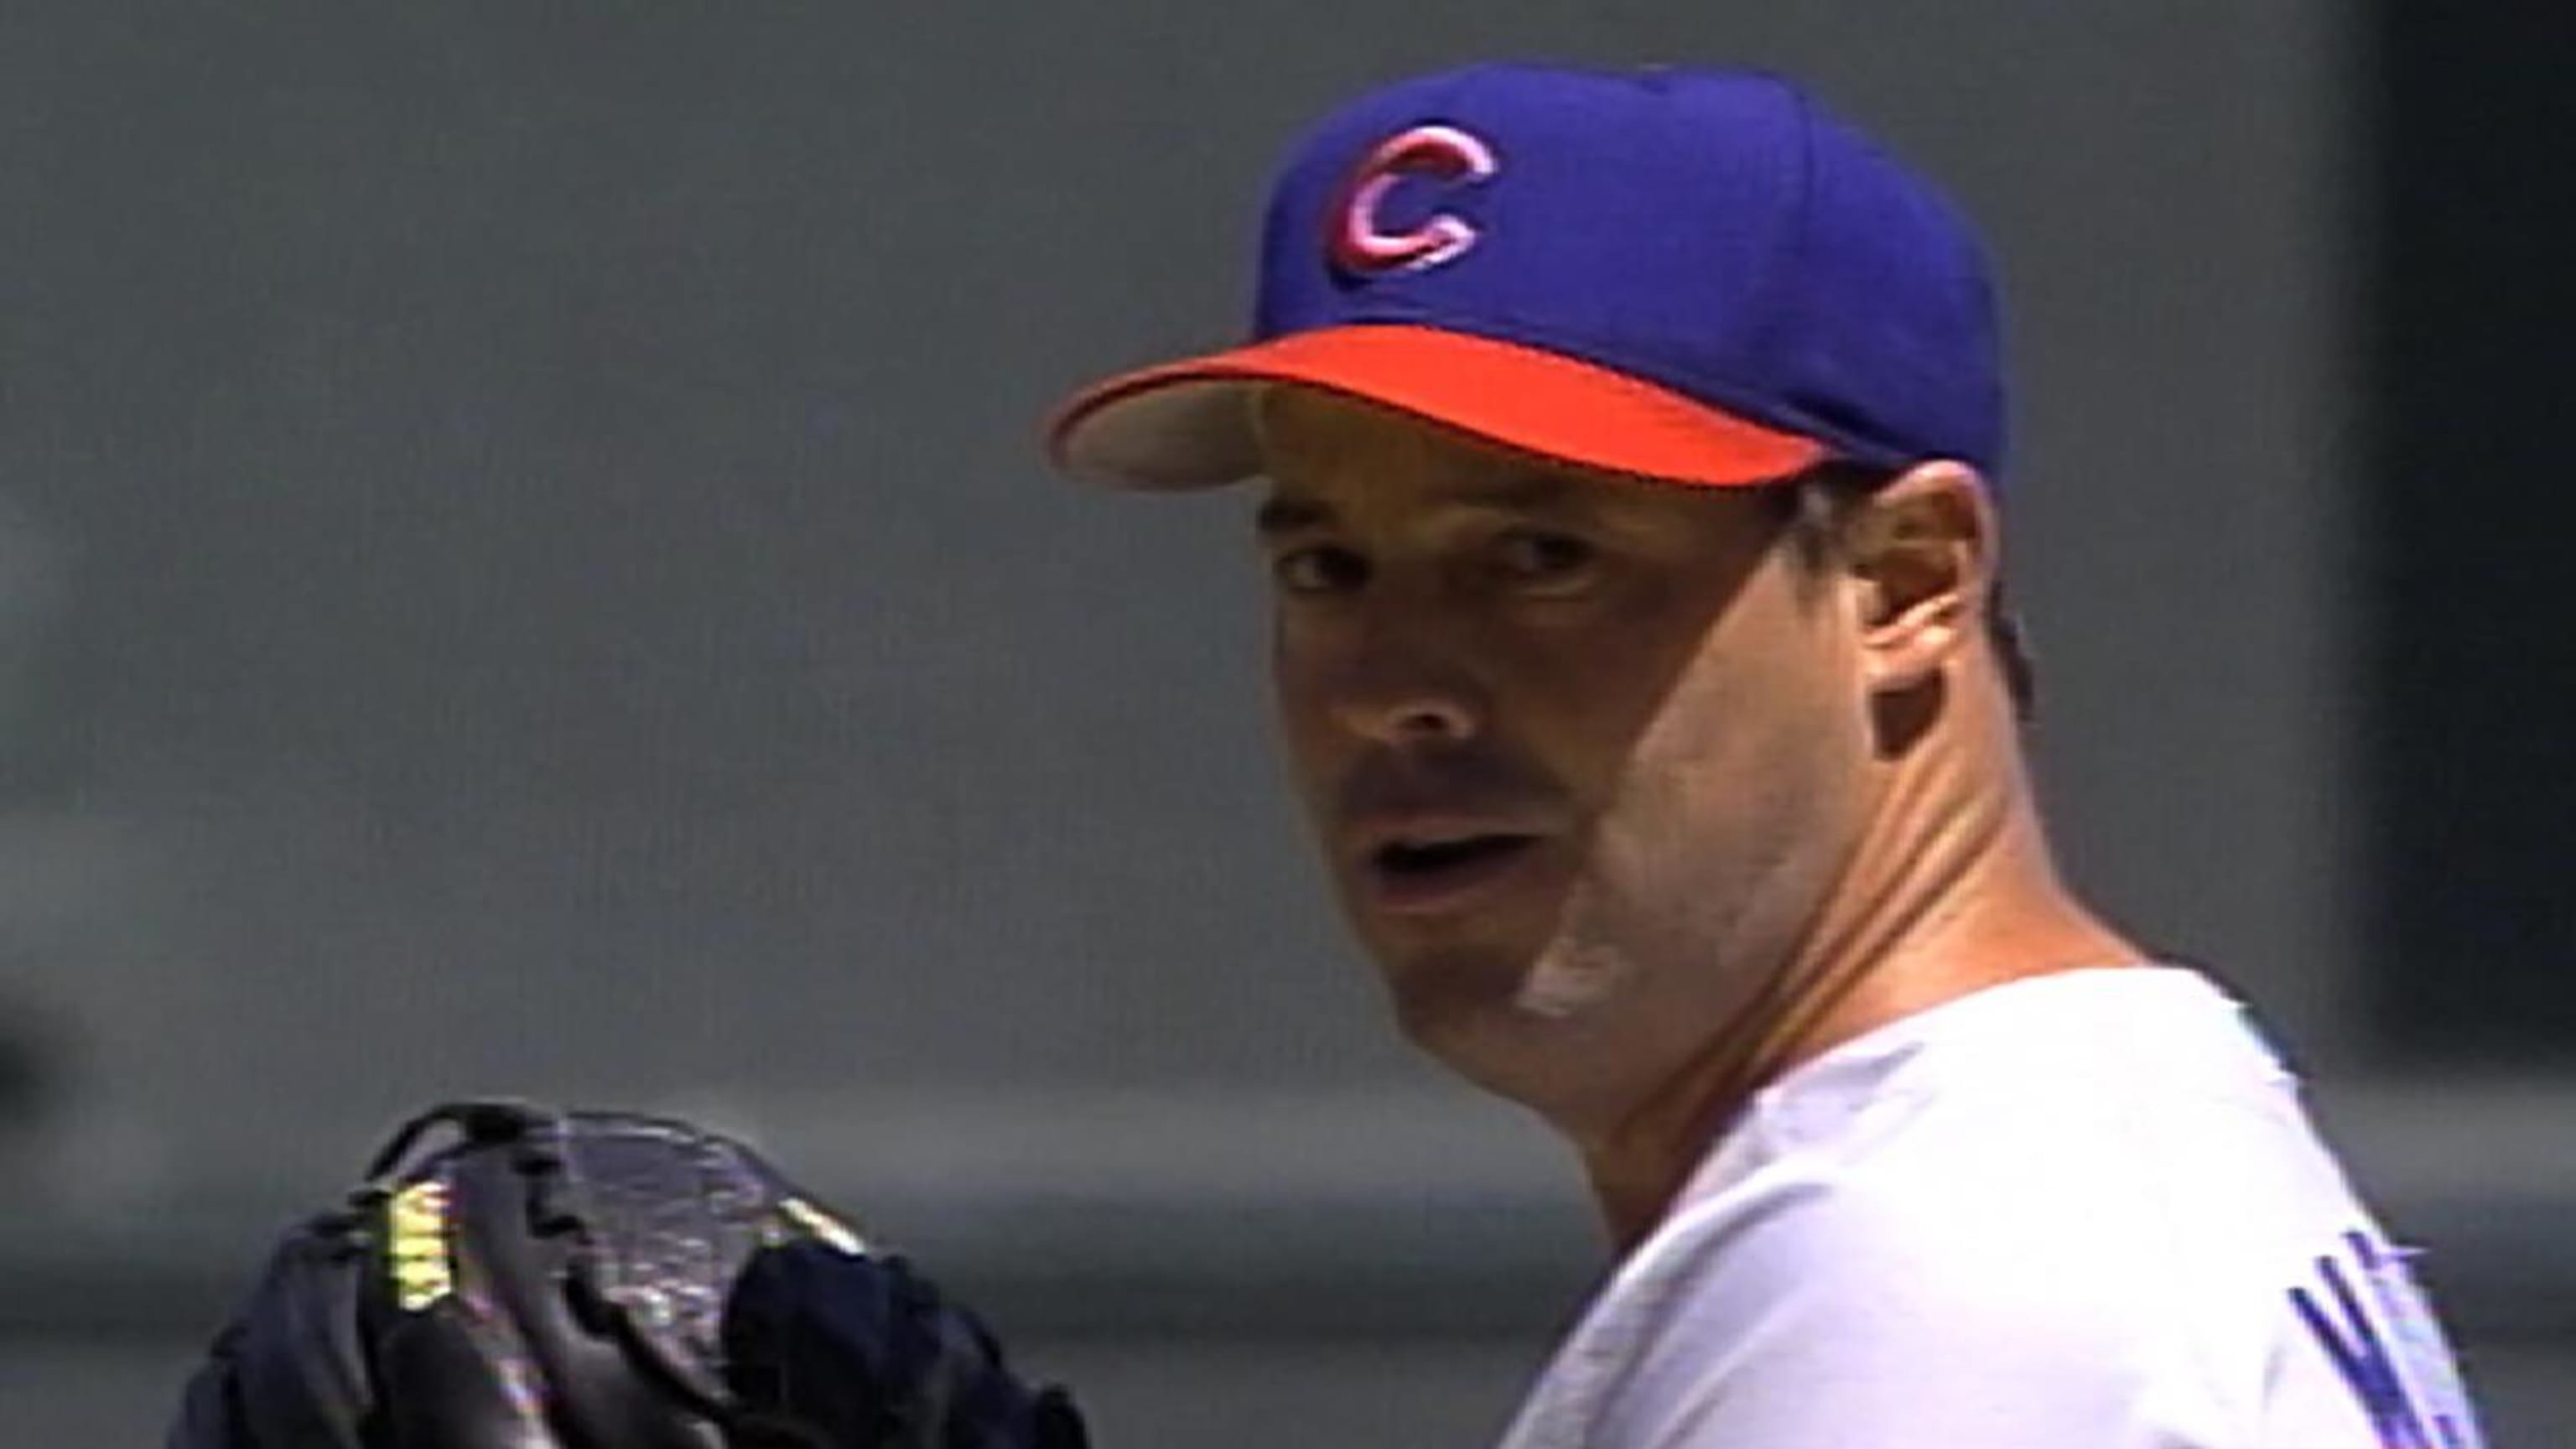 Baseballer - Greg Maddux was an absolute savage 😂